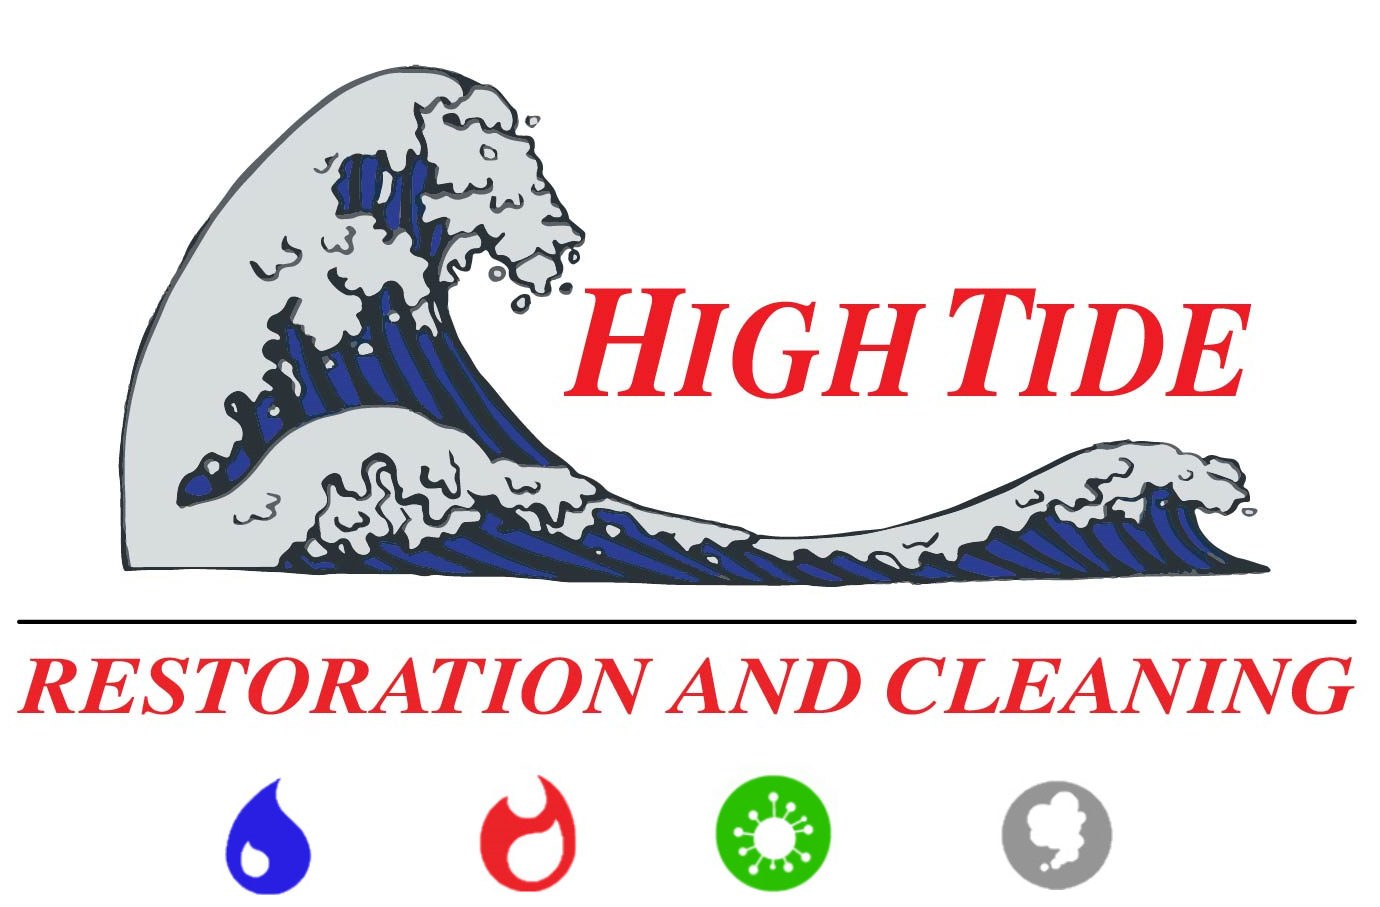 High Tide Logo with symbolsJPG.jpg